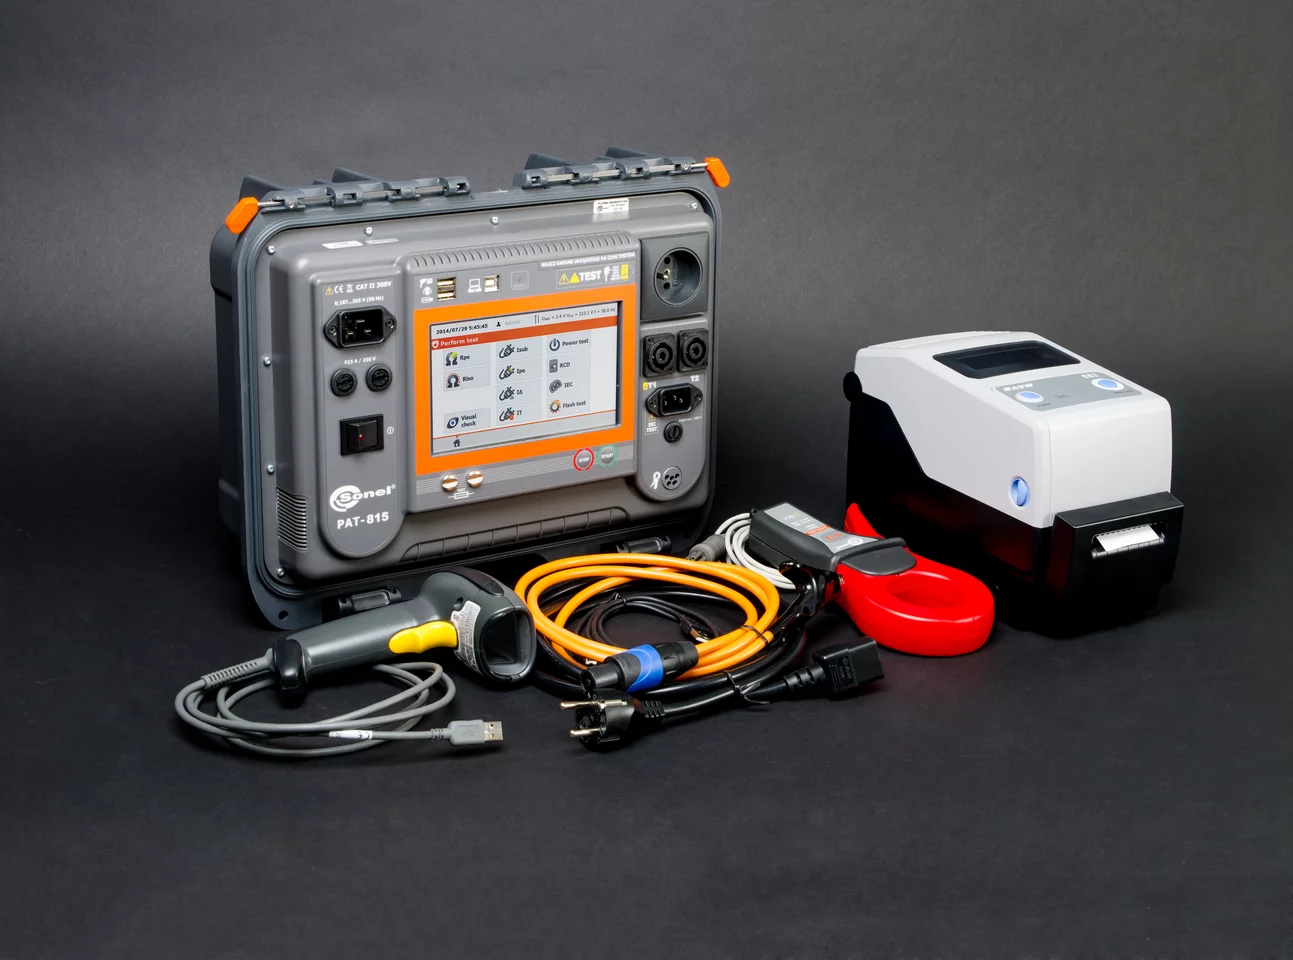 Portable appliance tester PAT-820-2